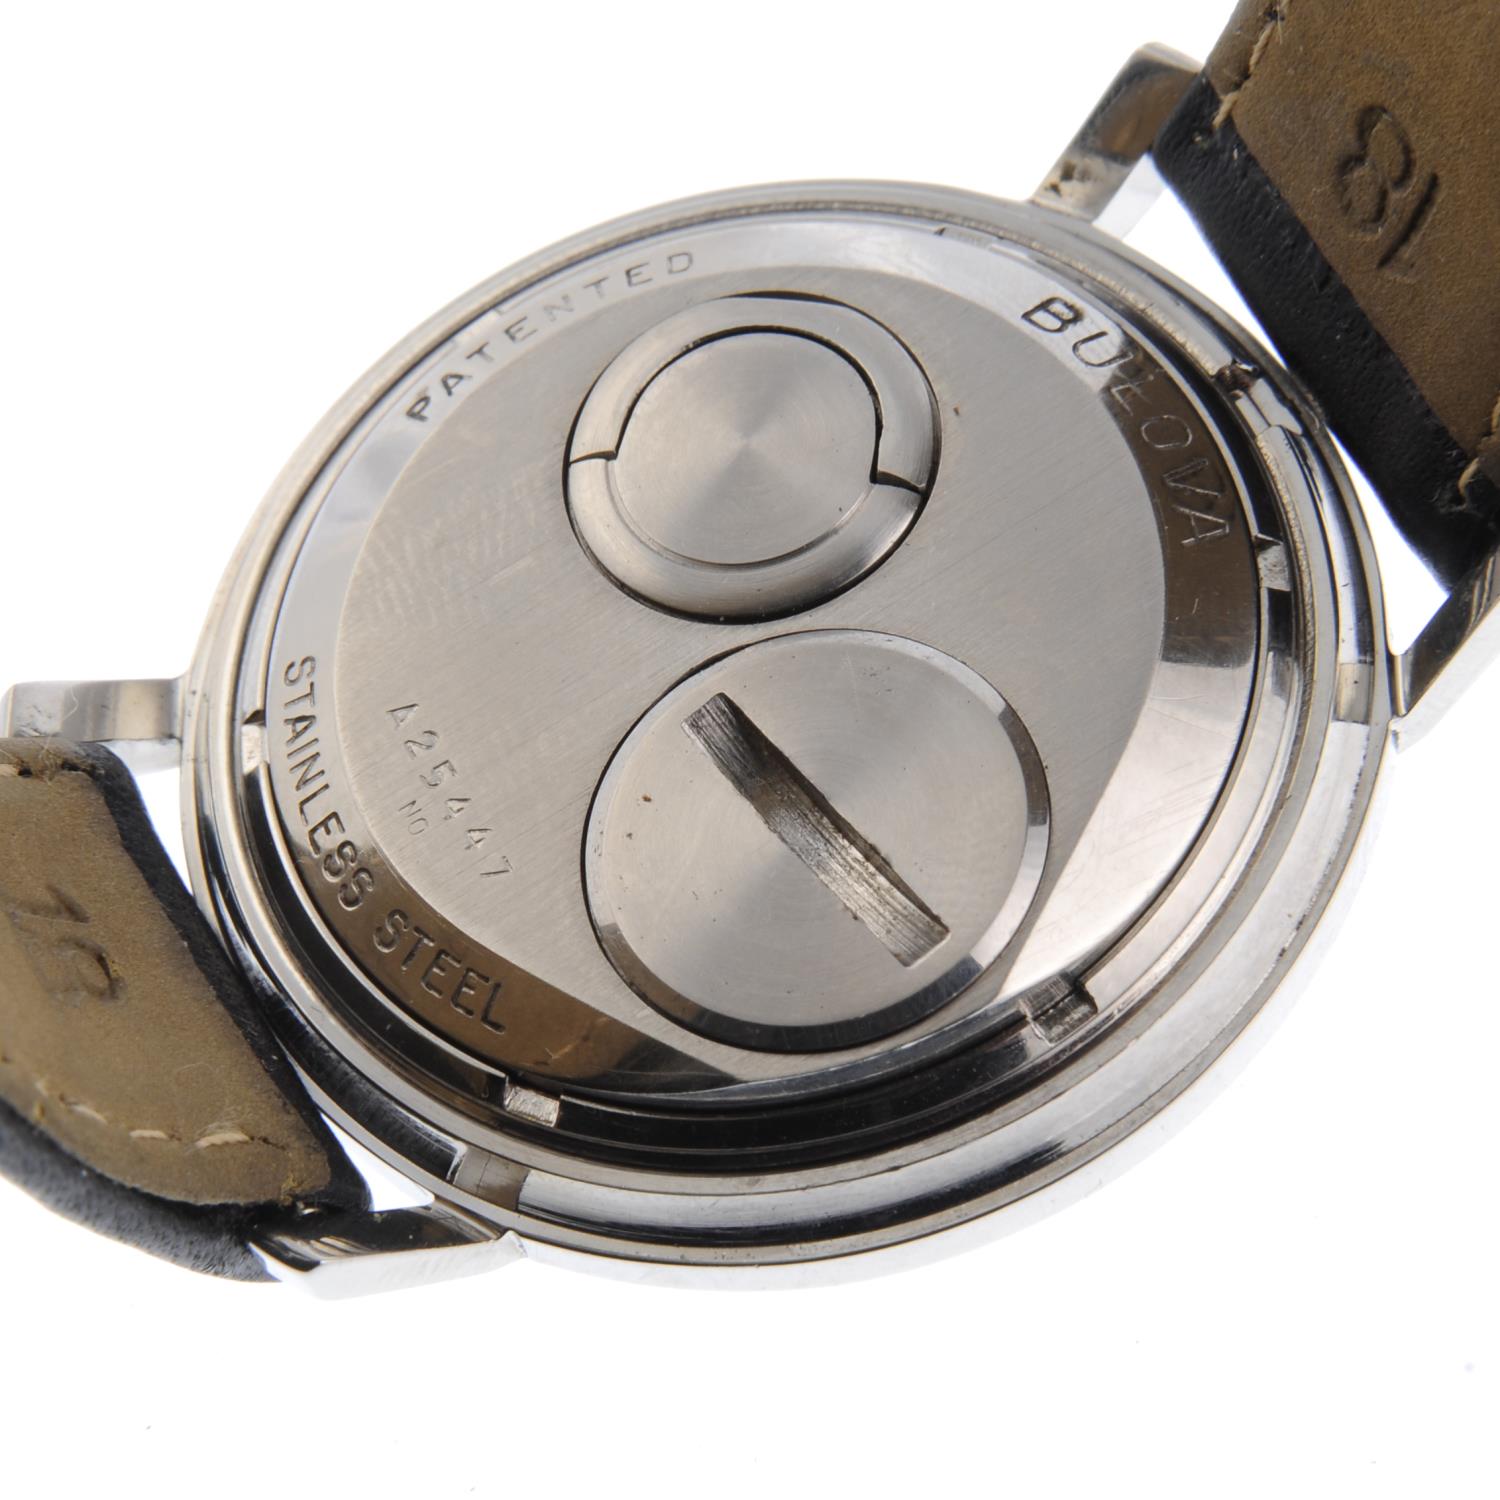 BULOVA - a gentleman's Accutron Spaceview wrist watch. - Image 2 of 3